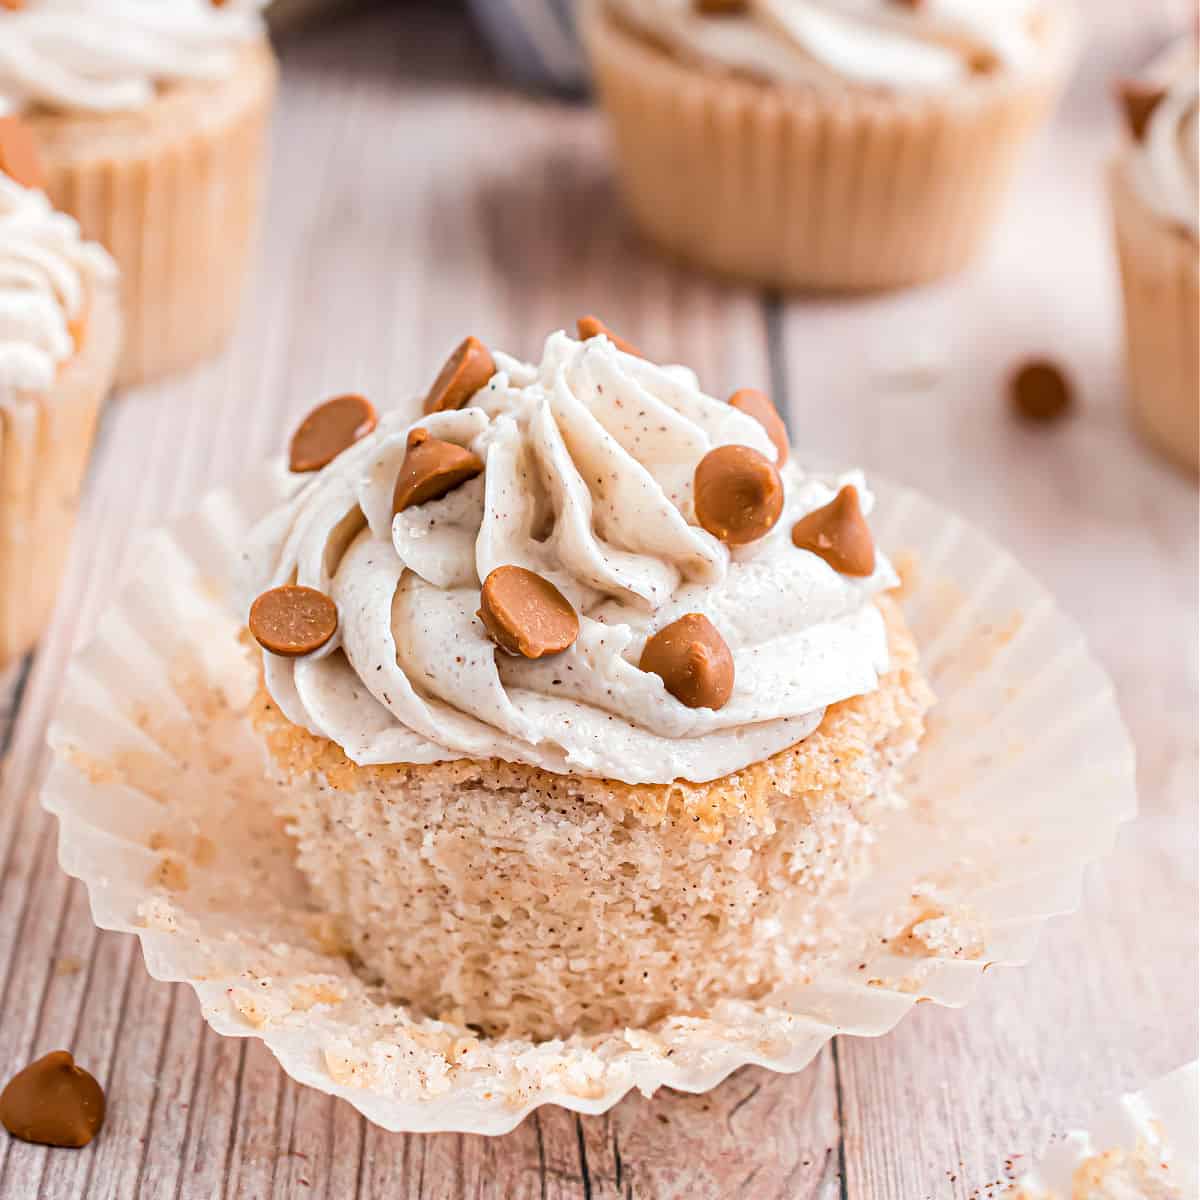 https://www.shugarysweets.com/wp-content/uploads/2015/11/cinnamon-spice-cupcakes-recipe.jpg